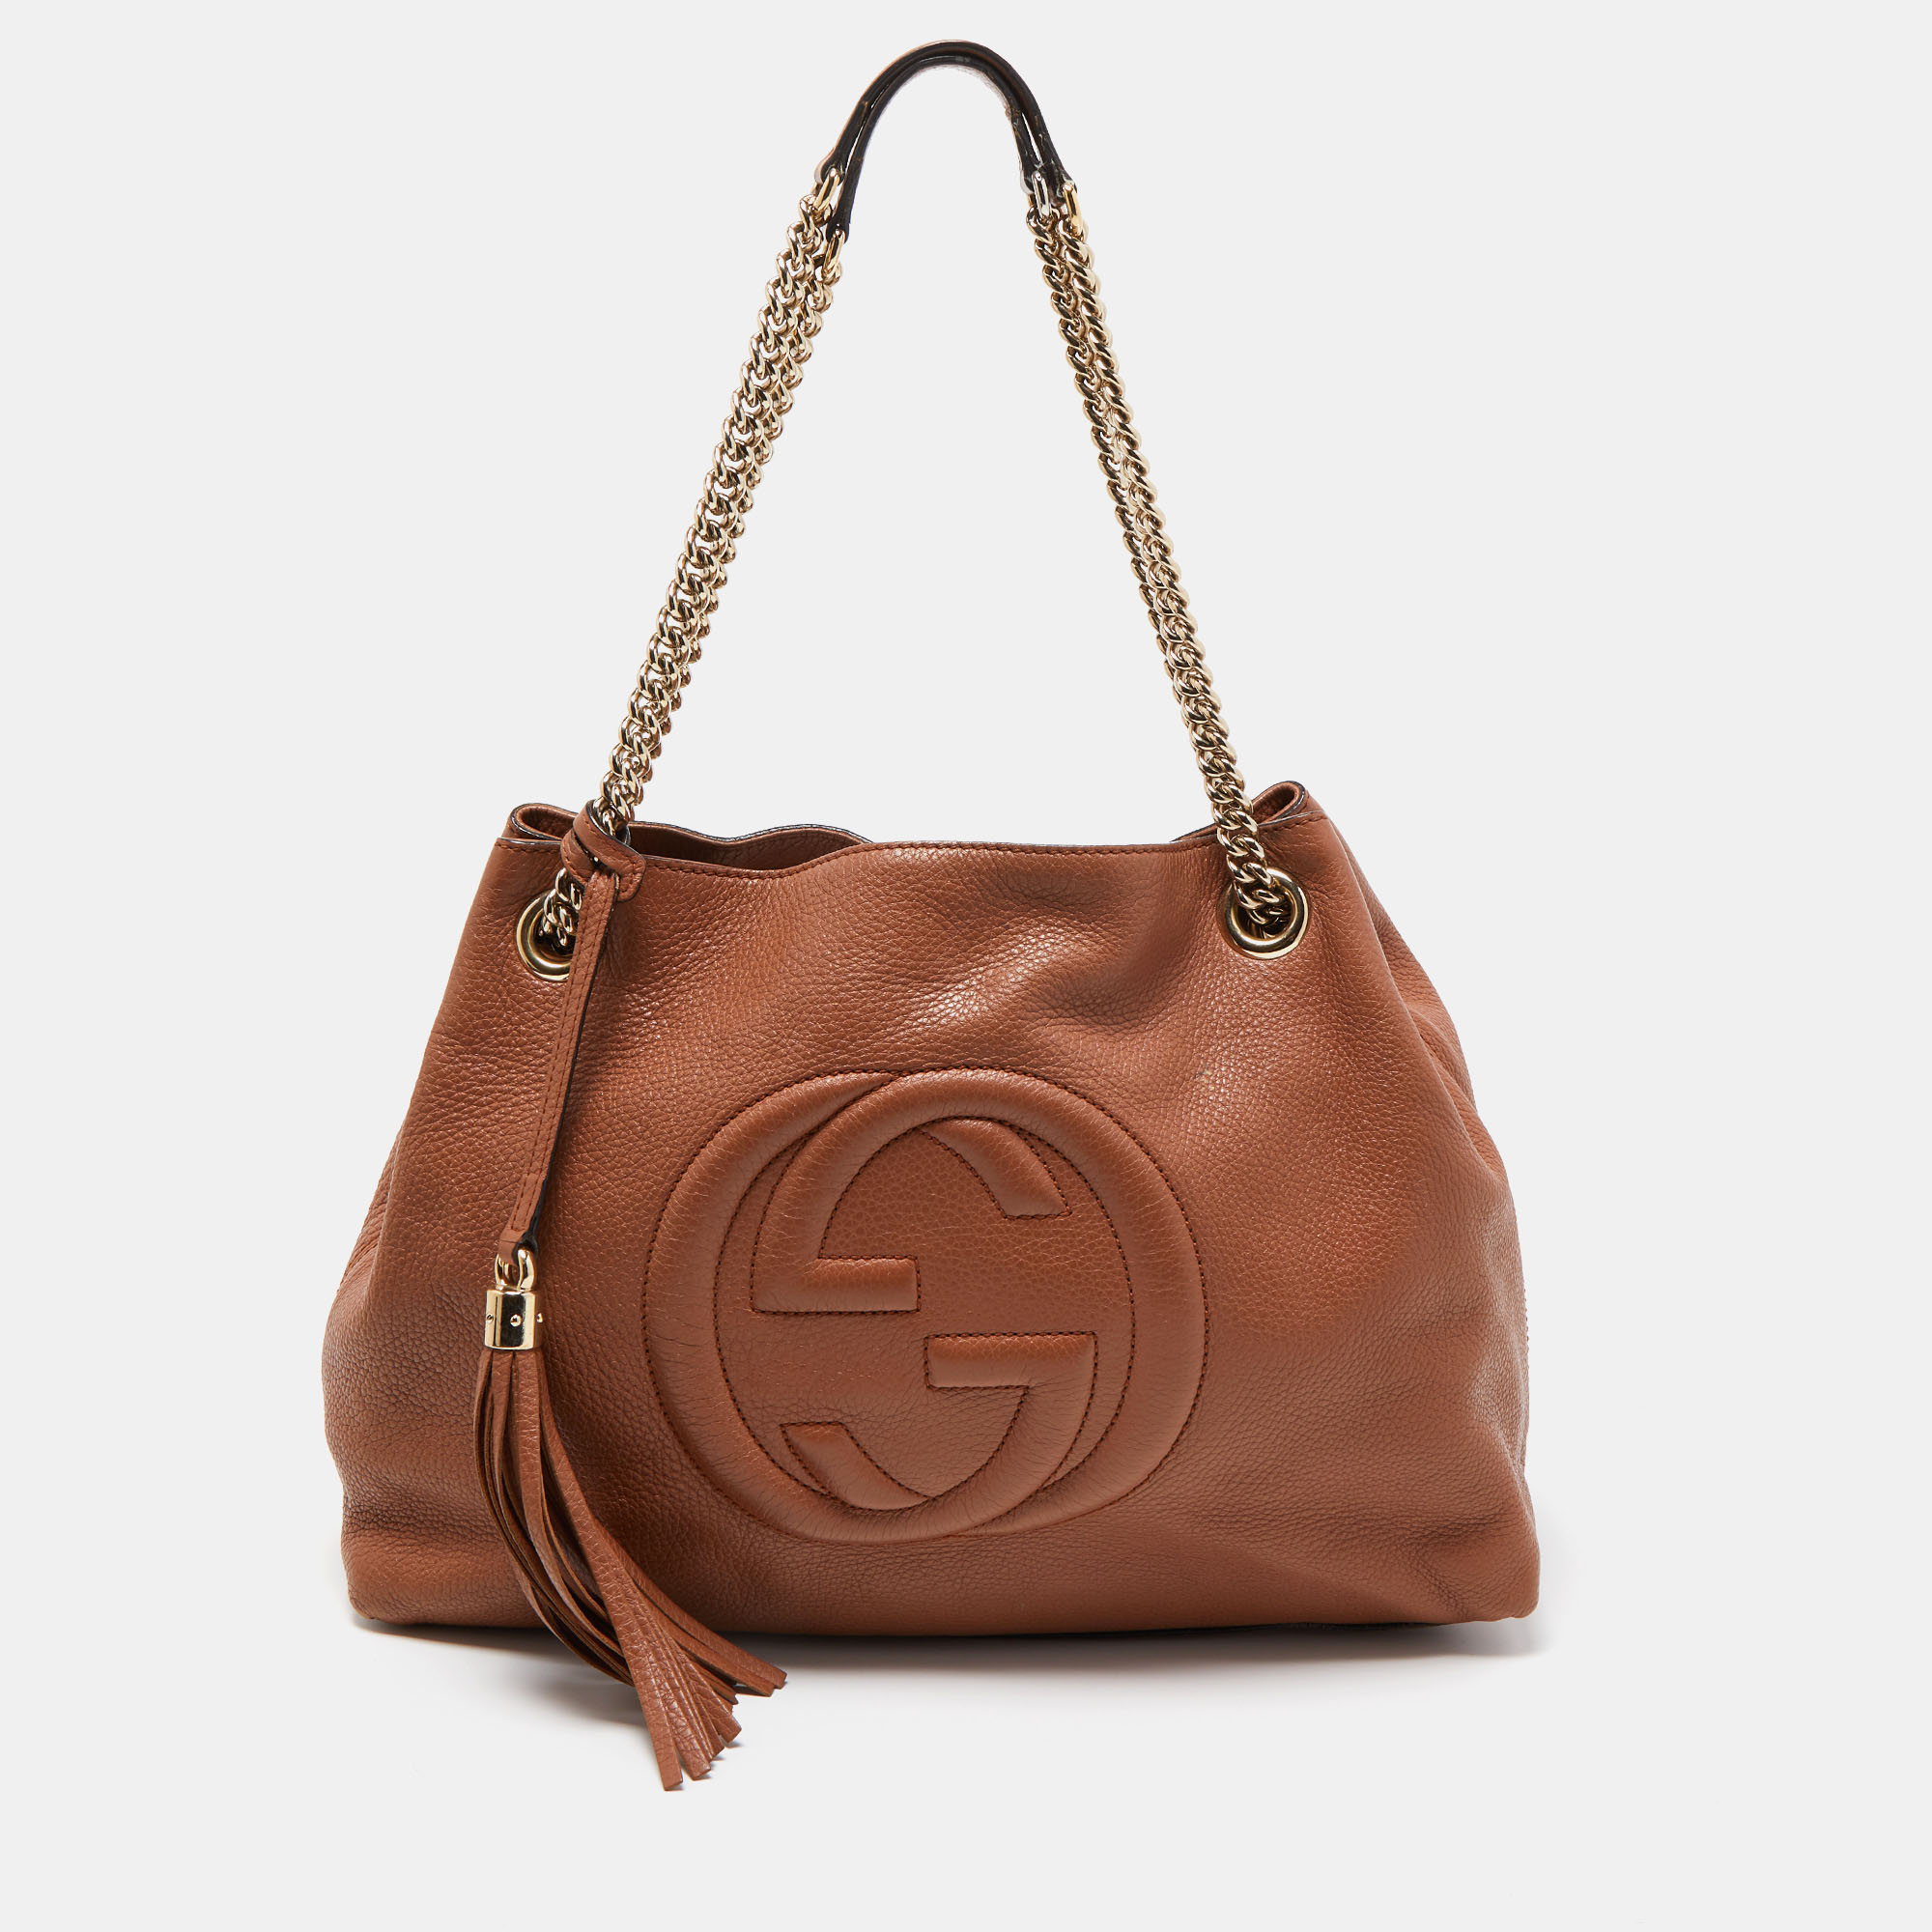 Gucci Brown Leather Medium Soho Chain Shoulder Bag